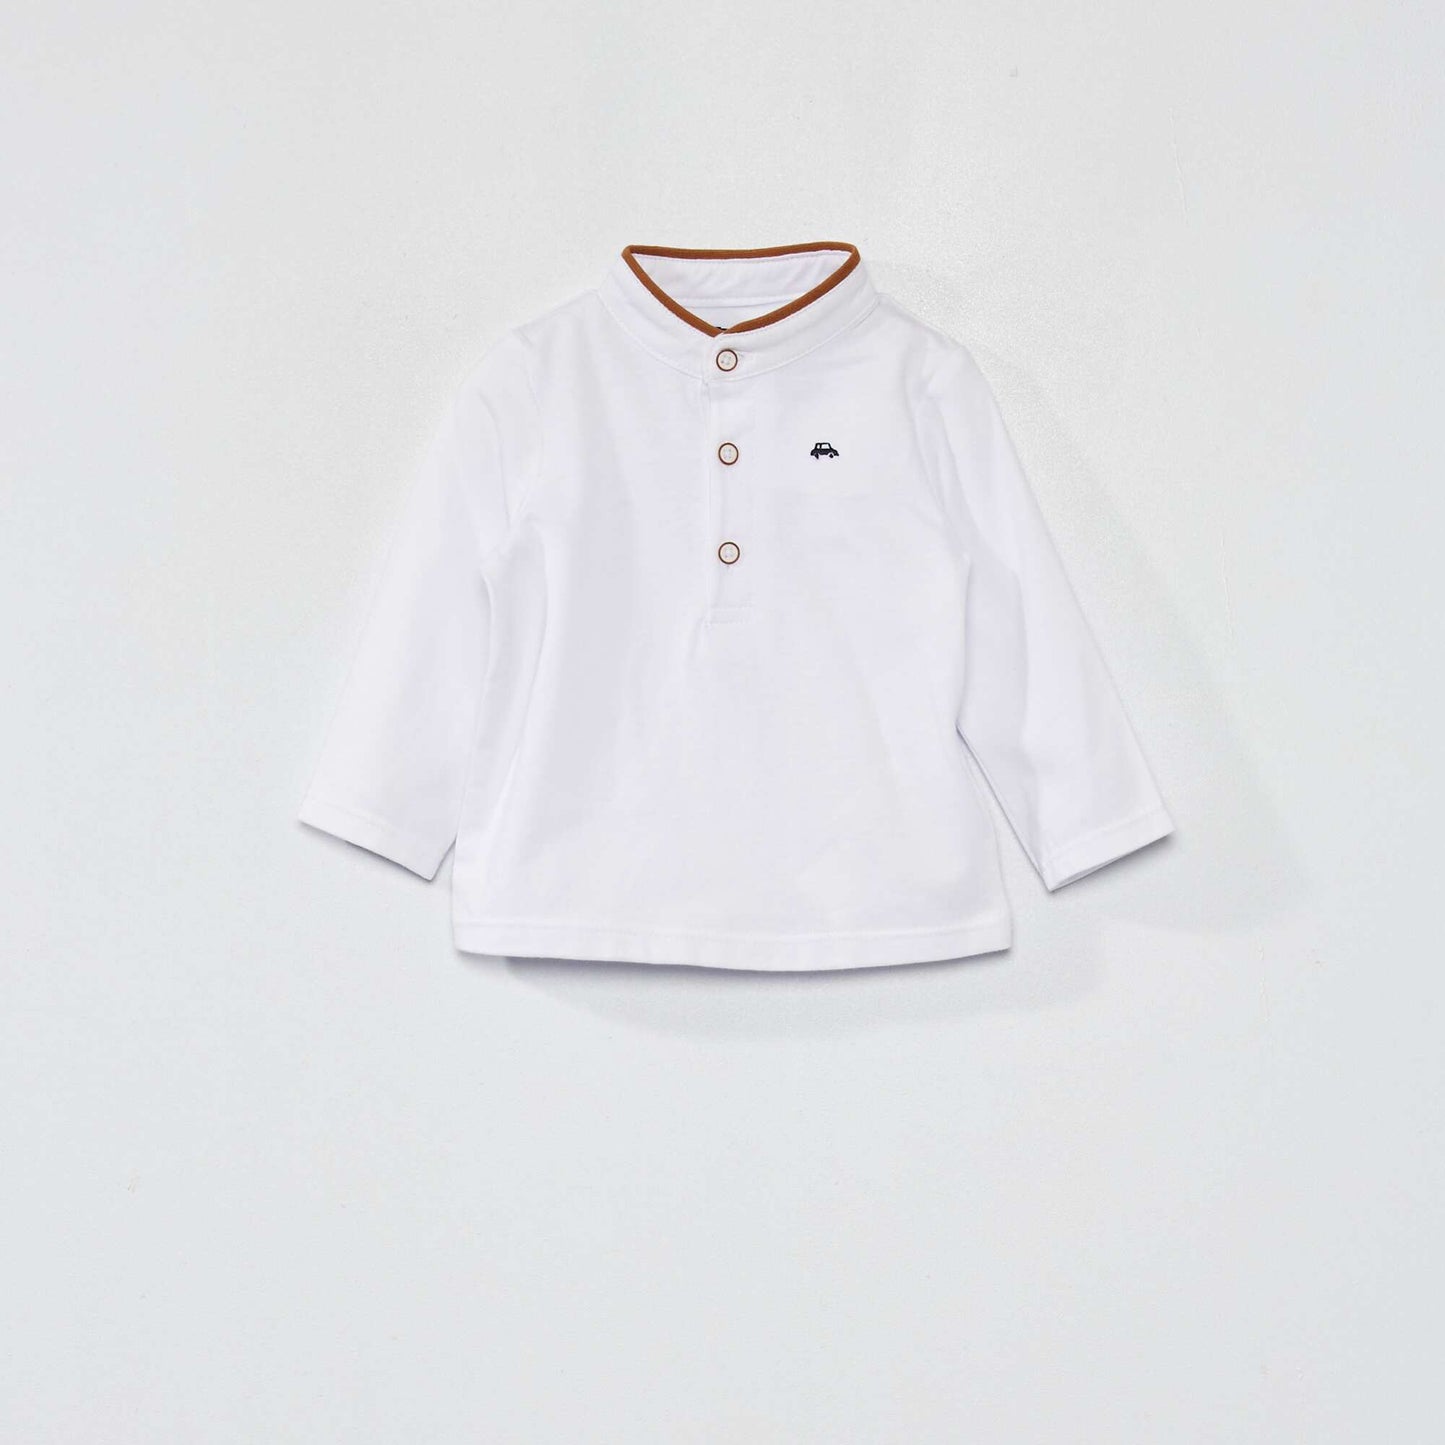 Ensemble - salopette + t-shirt Marron/blanc